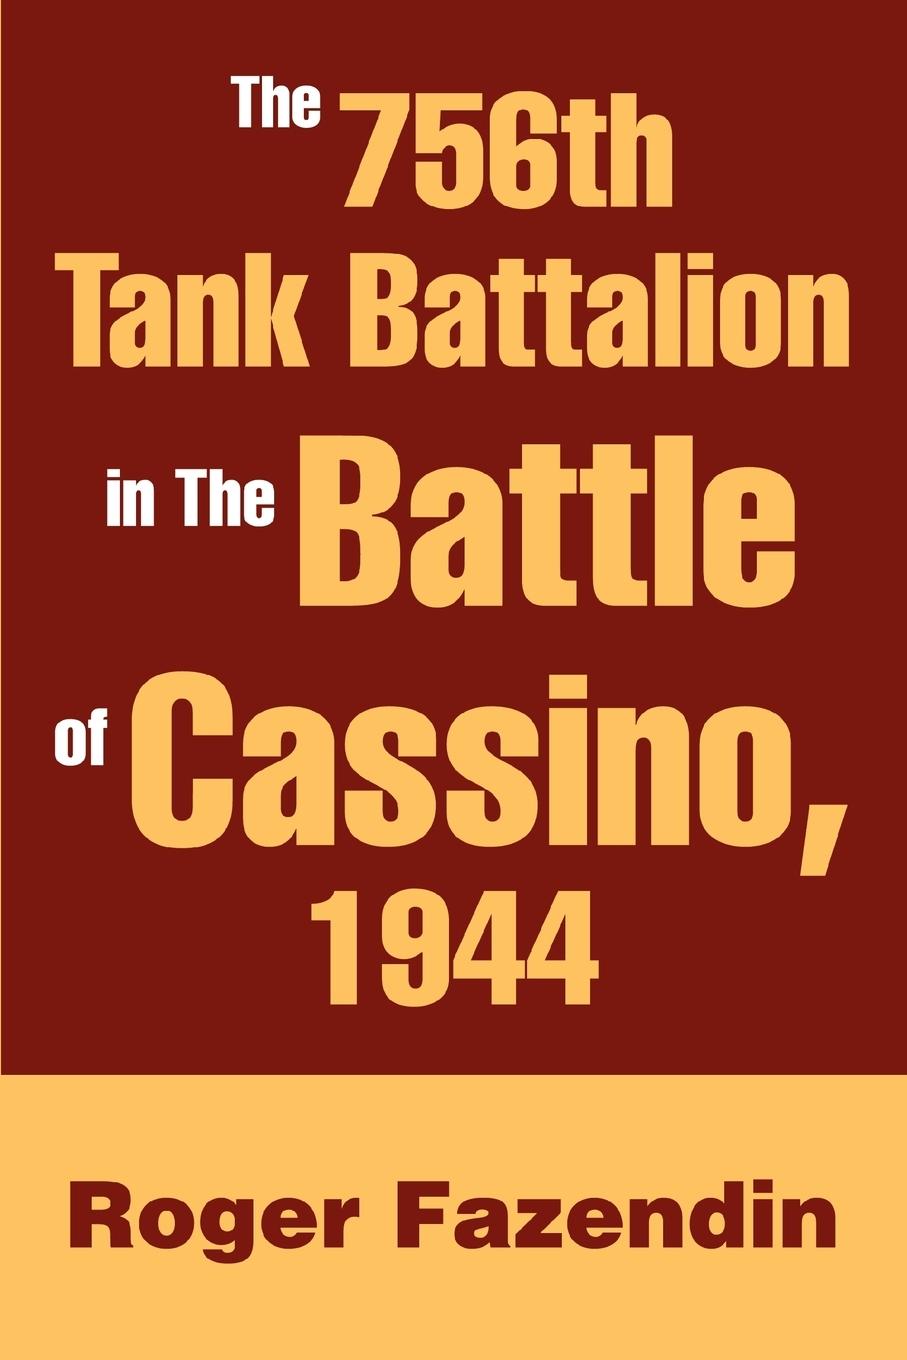 The 756th Tank Battalion in The Battle of Cassino, 1944 - Fazendin, Roger